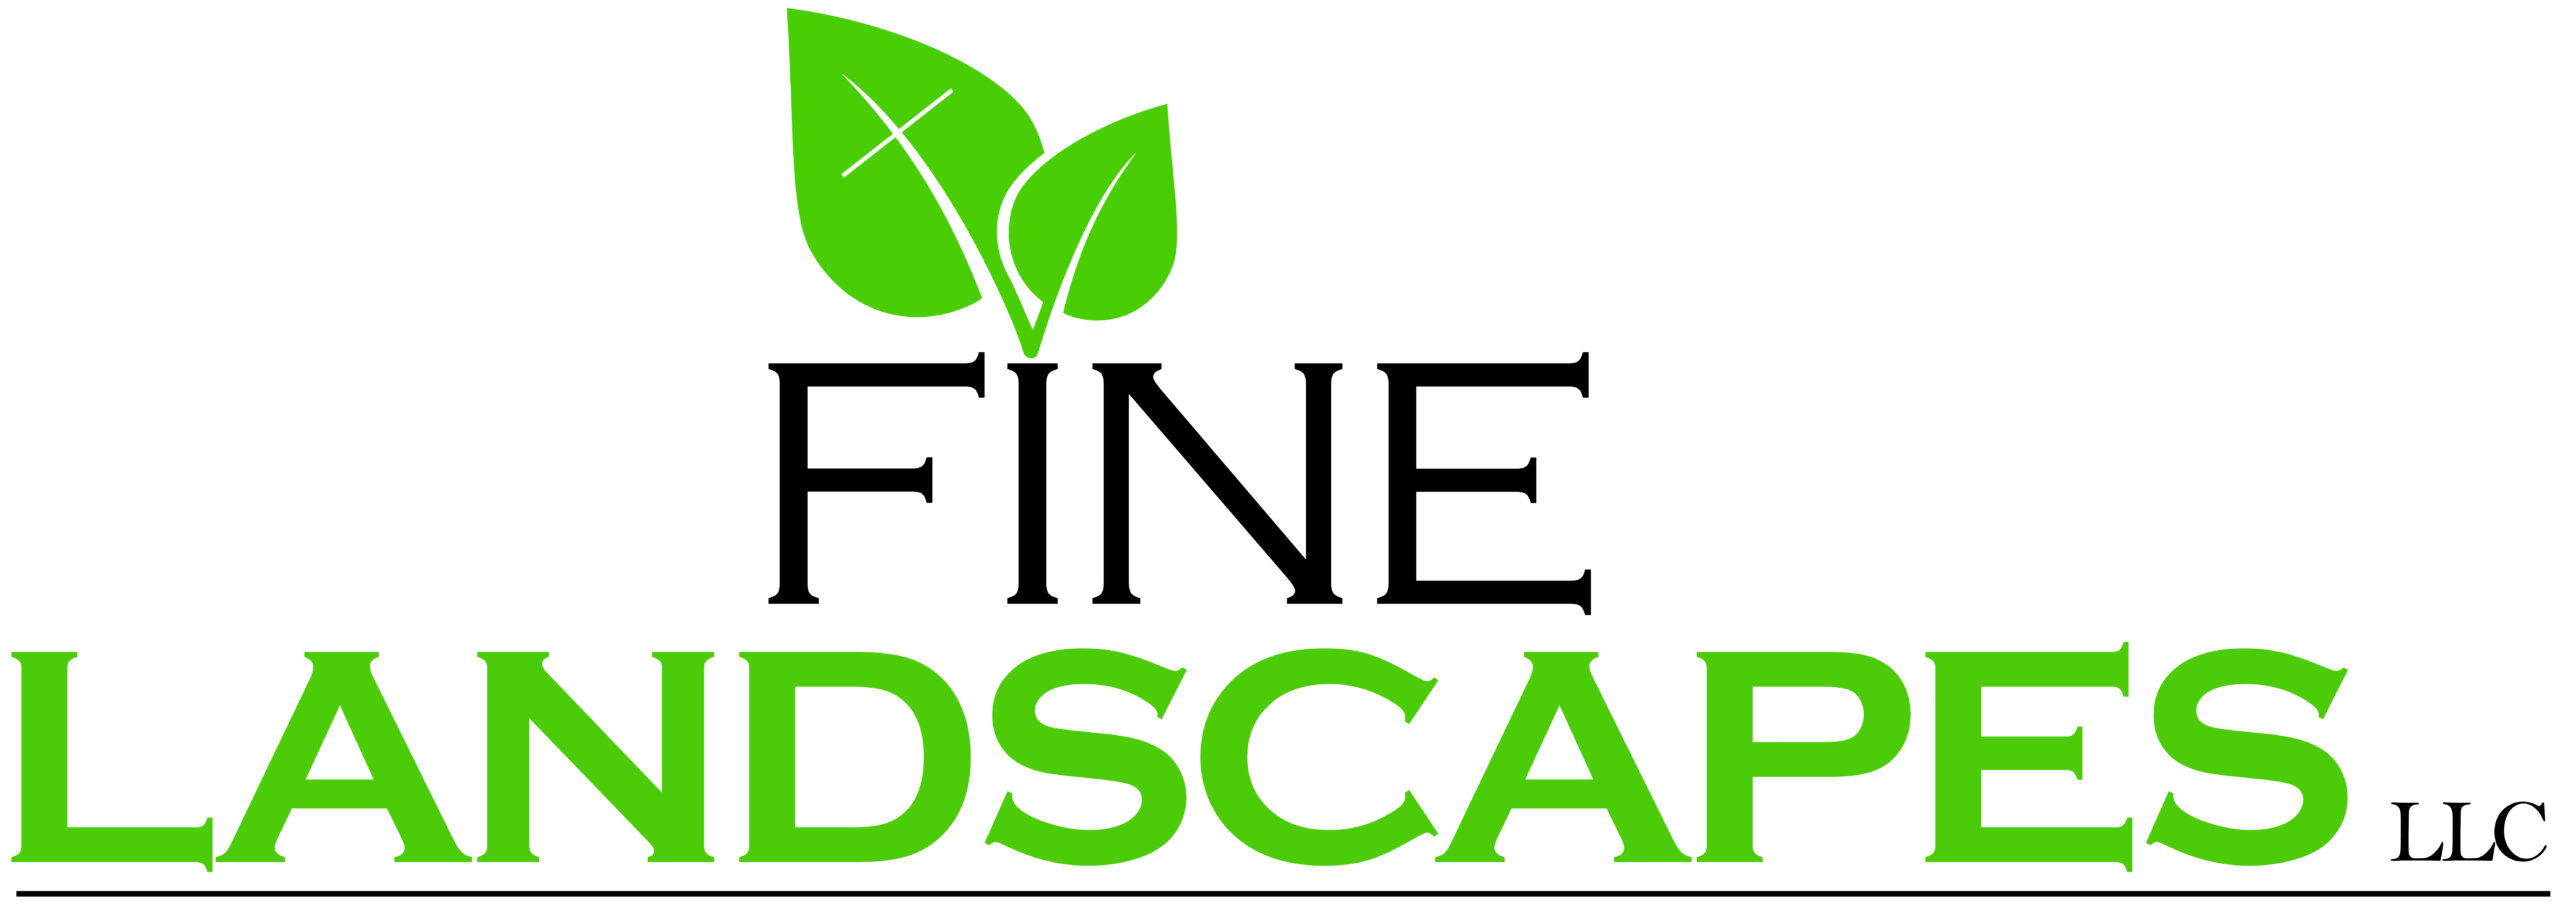 Fine Landscapes LLC | Landscape Design | Lawn Care | 908-878-8553 